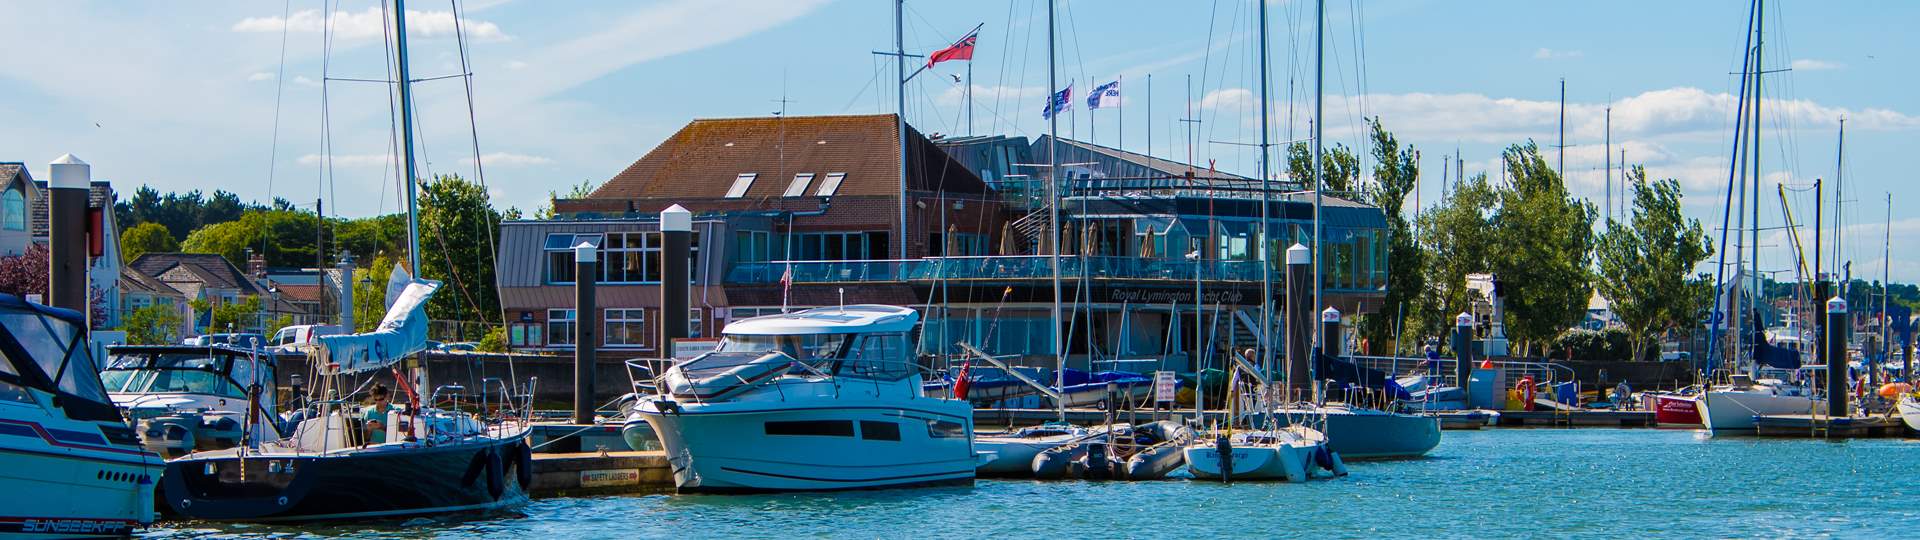 royal lymington yacht club membership fees